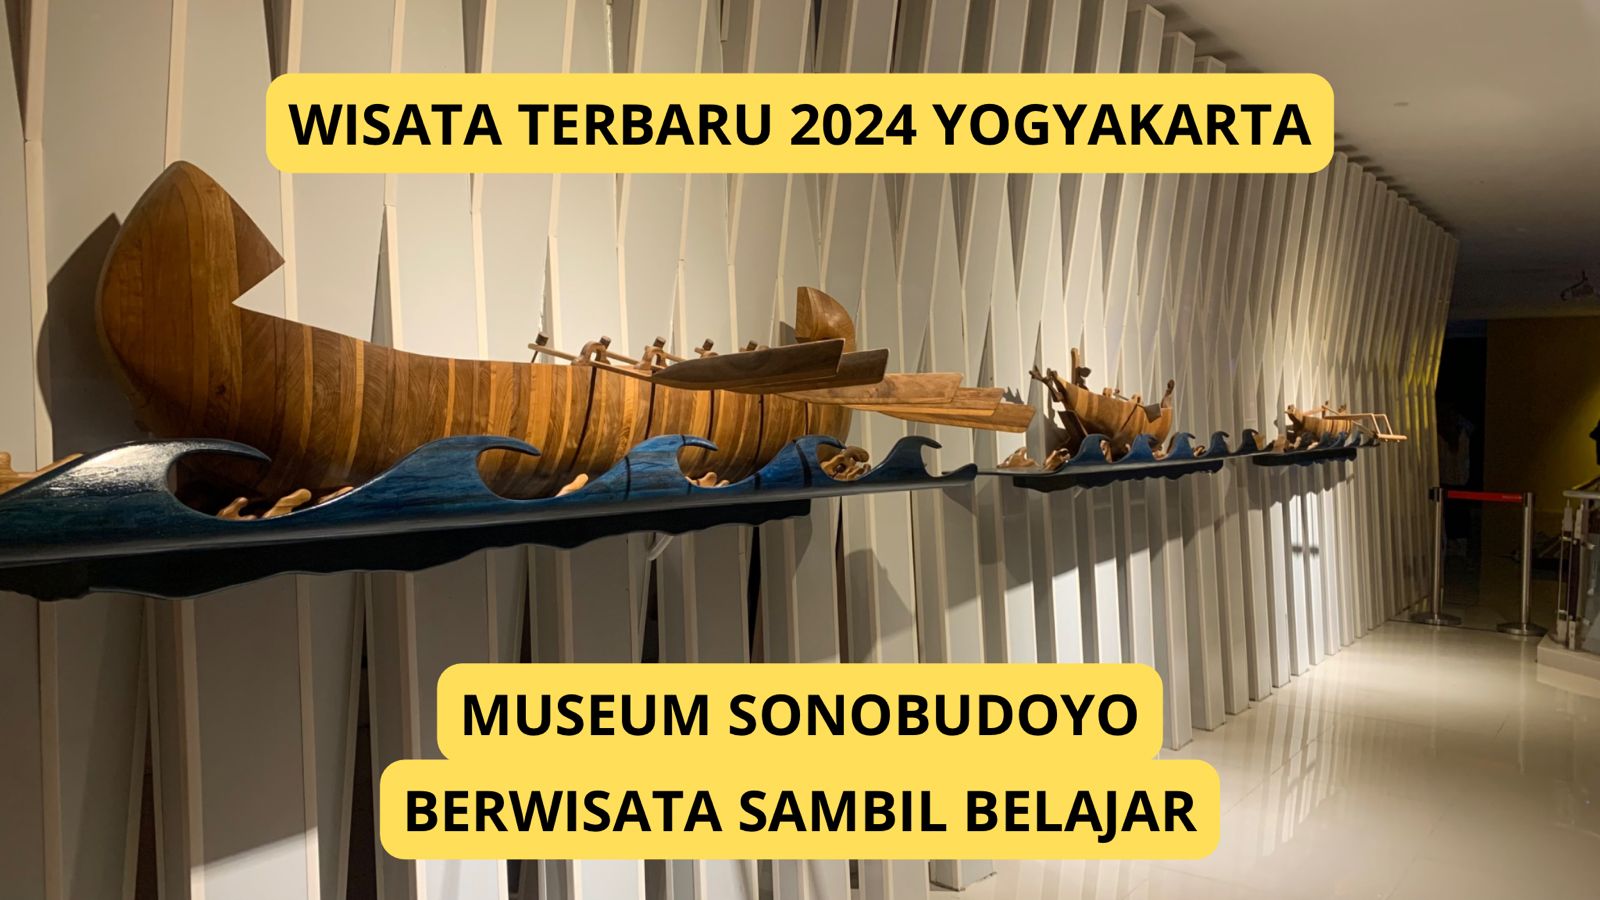 Piknik Sambil Belajar di Yogyakarta? Wisata Terbaru 2024 Museum Sonobudoyo Sangat Edukatif, Simak Ulasannya!